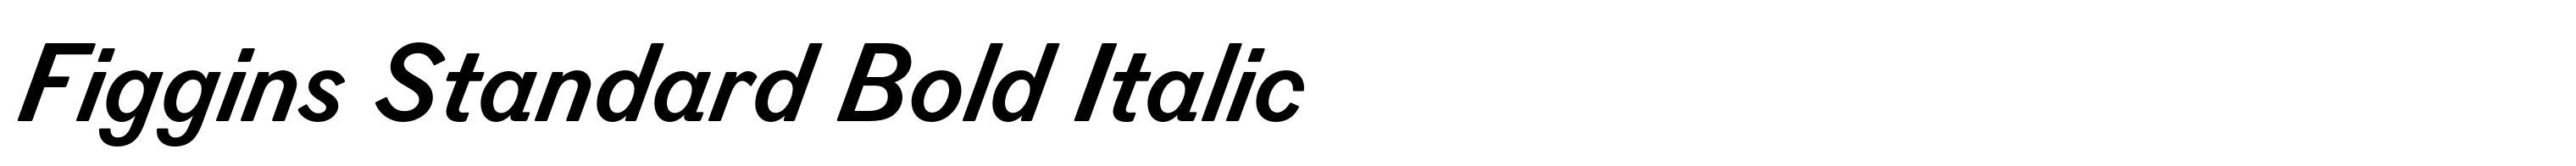 Figgins Standard Bold Italic